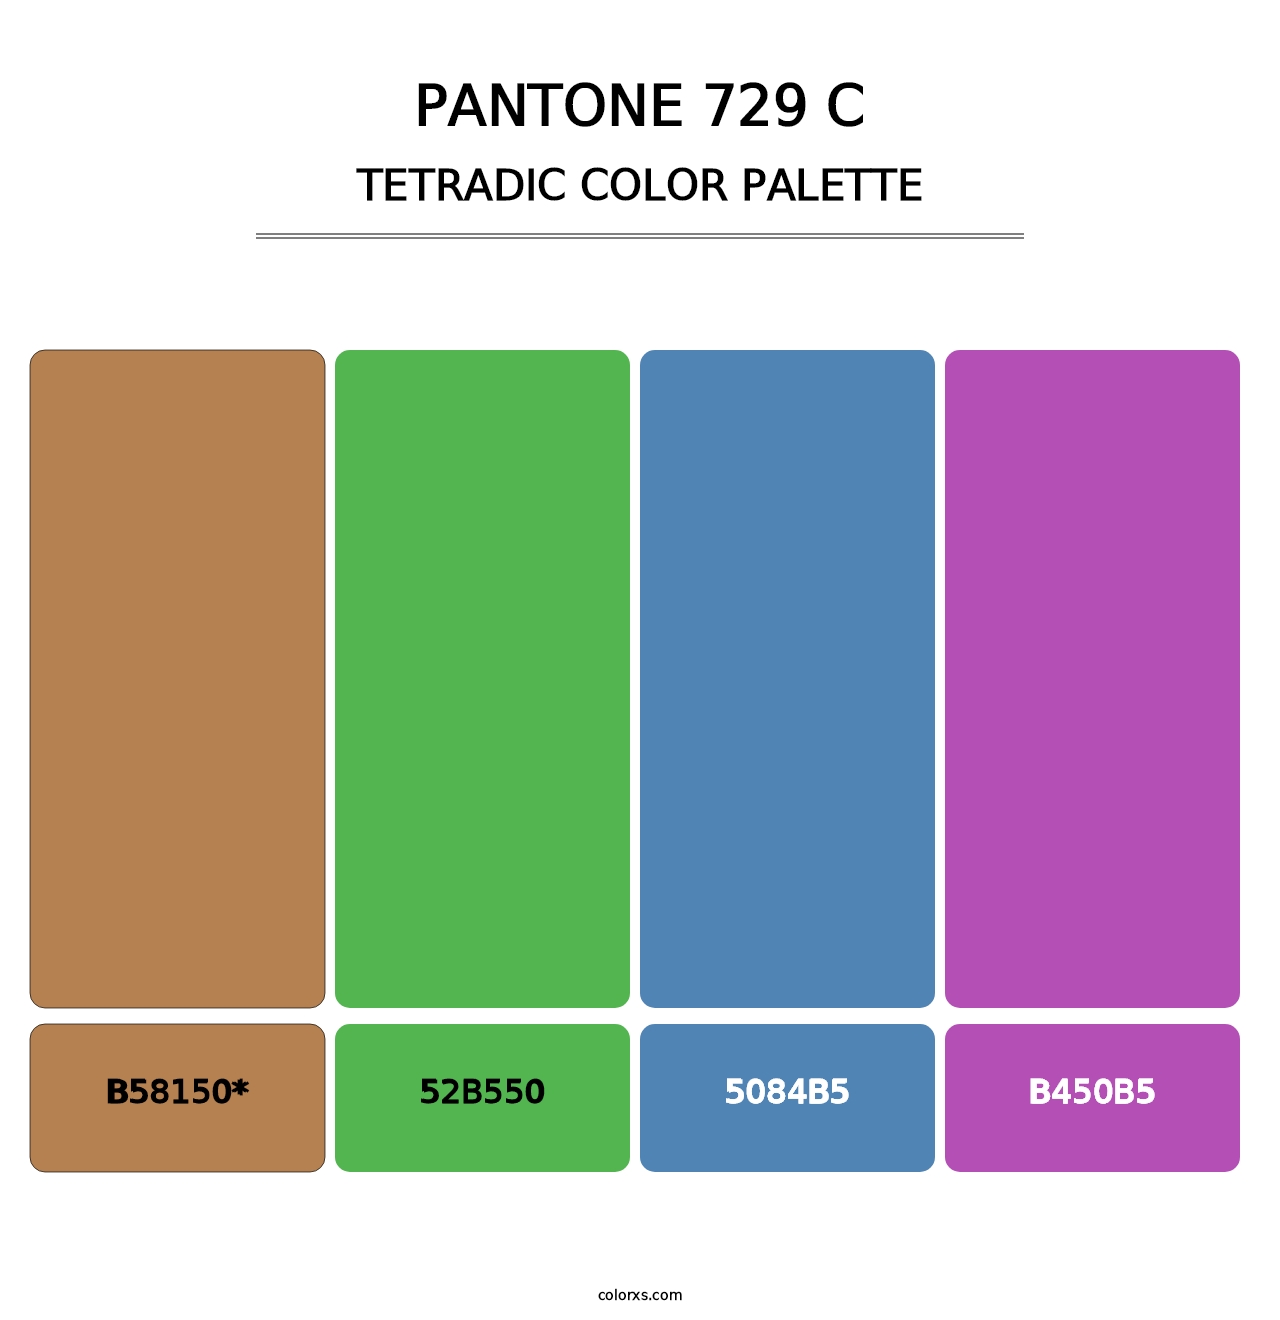 PANTONE 729 C - Tetradic Color Palette